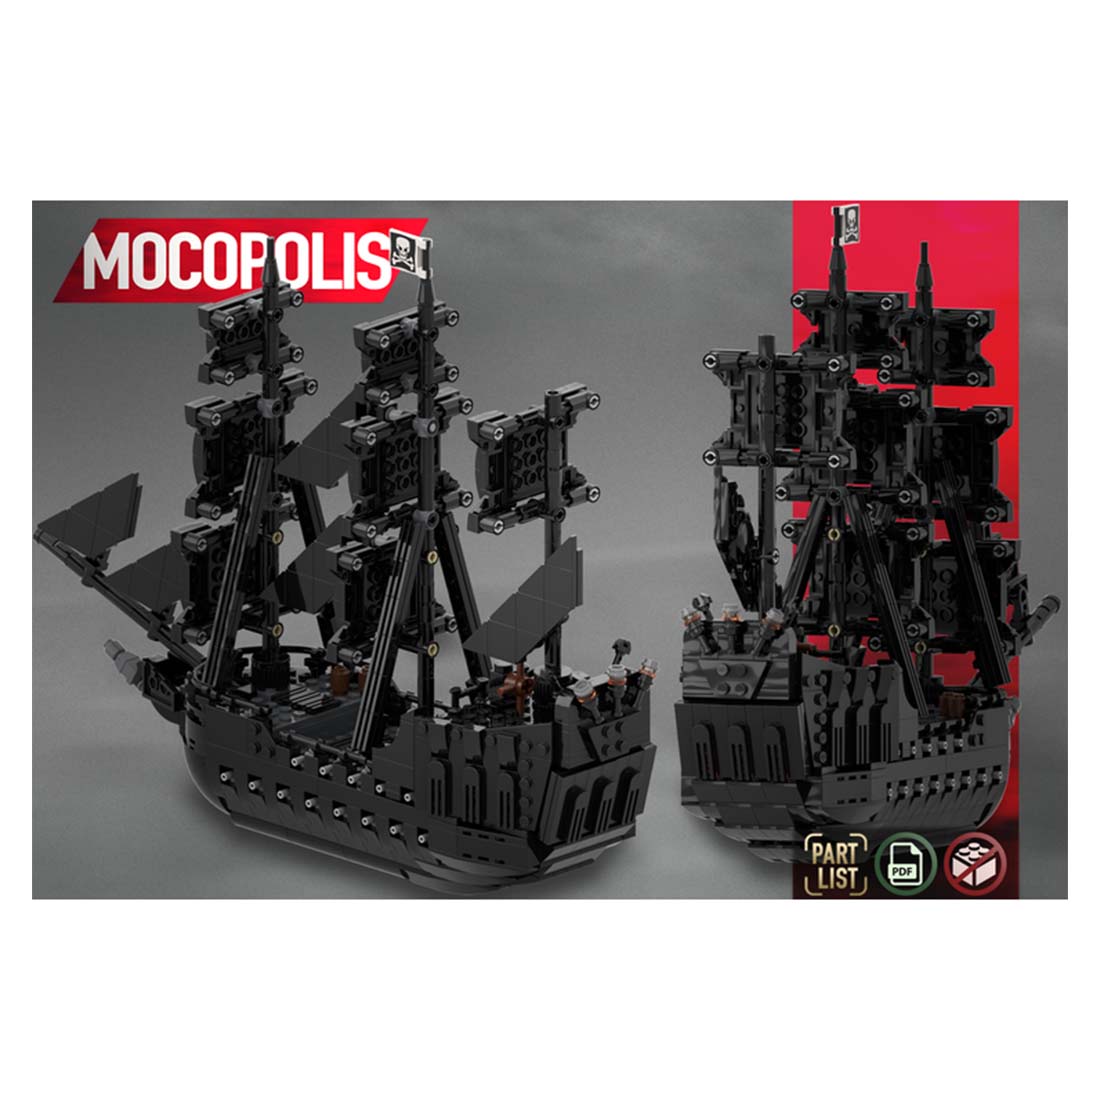 MOC-84574 Pirate Black Pearl Ship Model